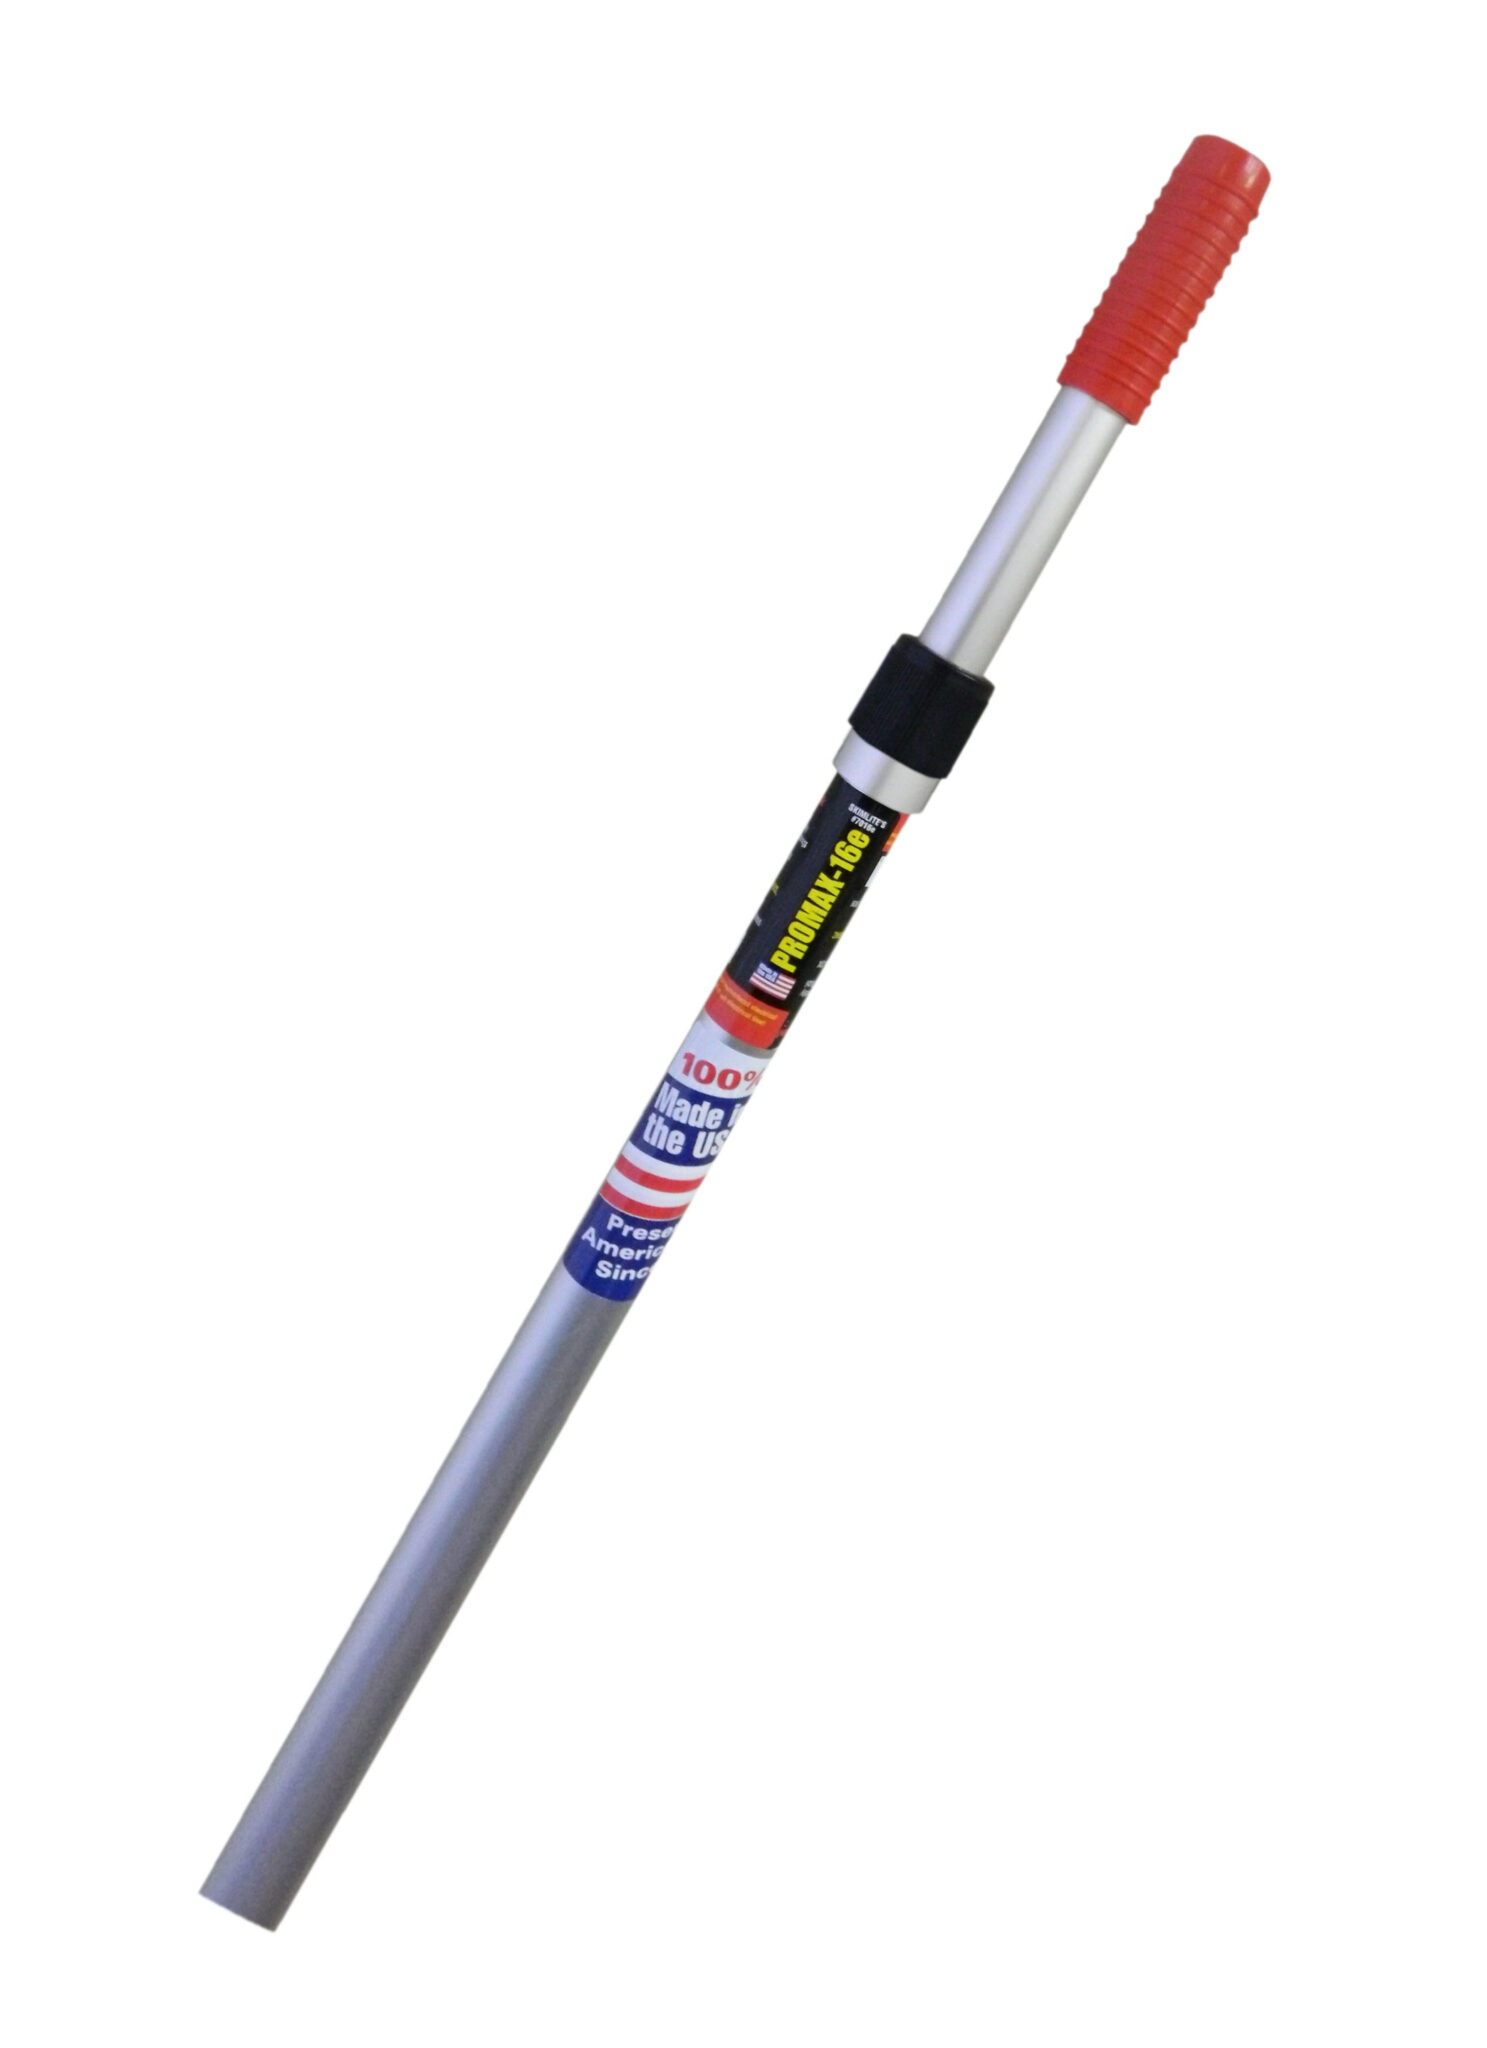 8 to 16 Feet (ft) Pole Heavy Duty Promax Pole